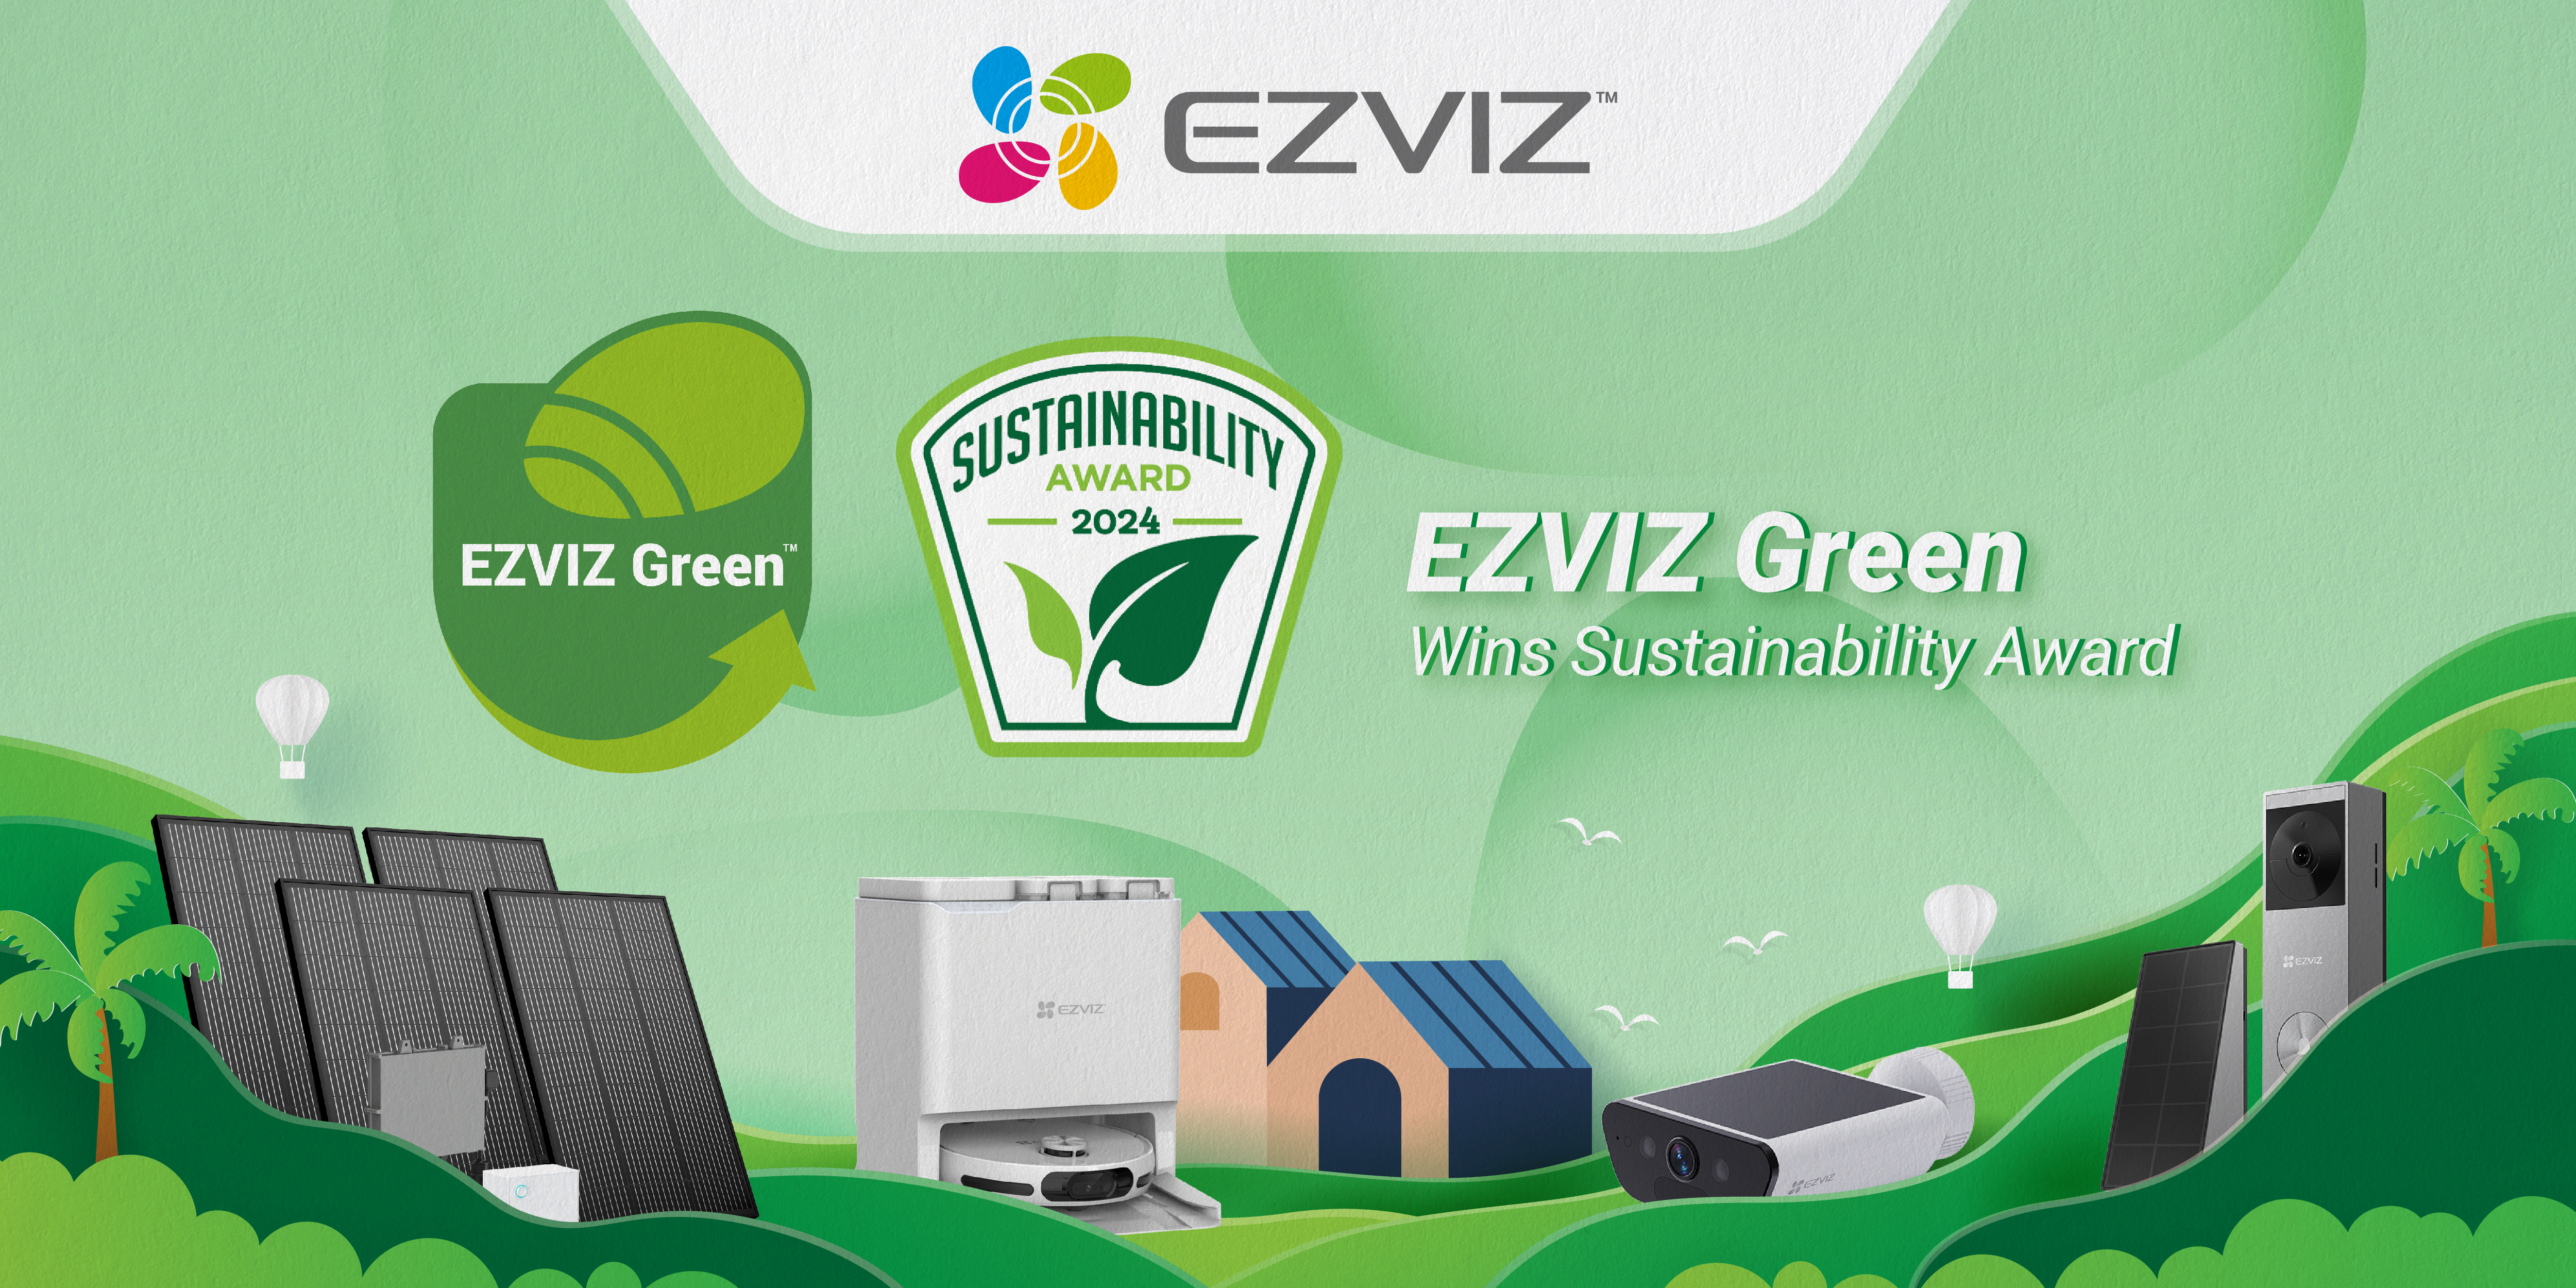 EZVIZ wins the 2024 Sustainability Award, with EZVIZ Green being selected as the Sustainability Initiative of the Year!